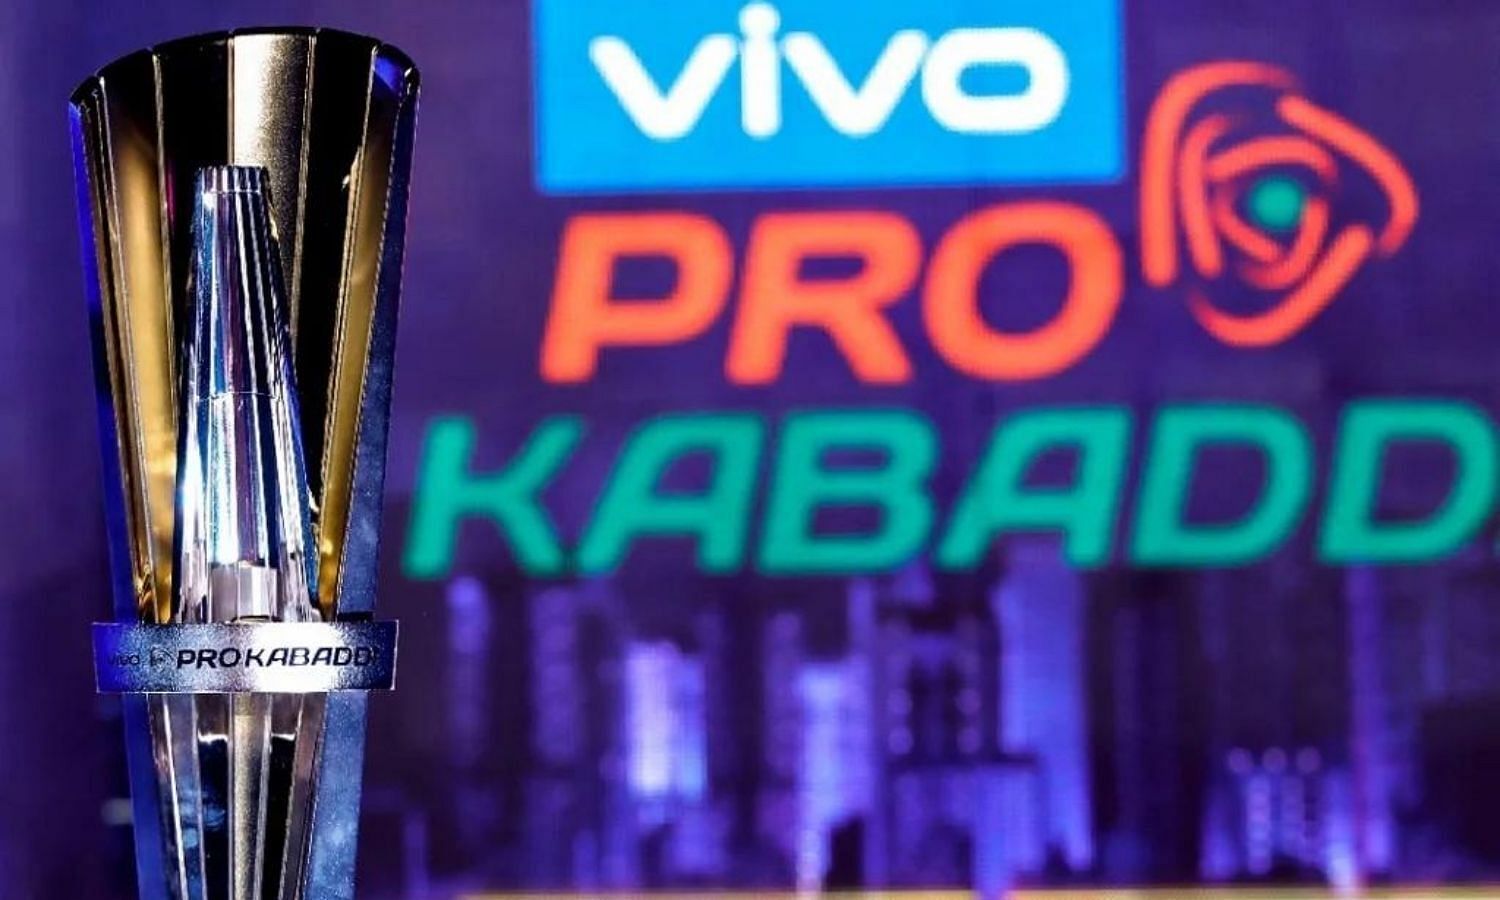 Pro Kabaddi League Trophy on display